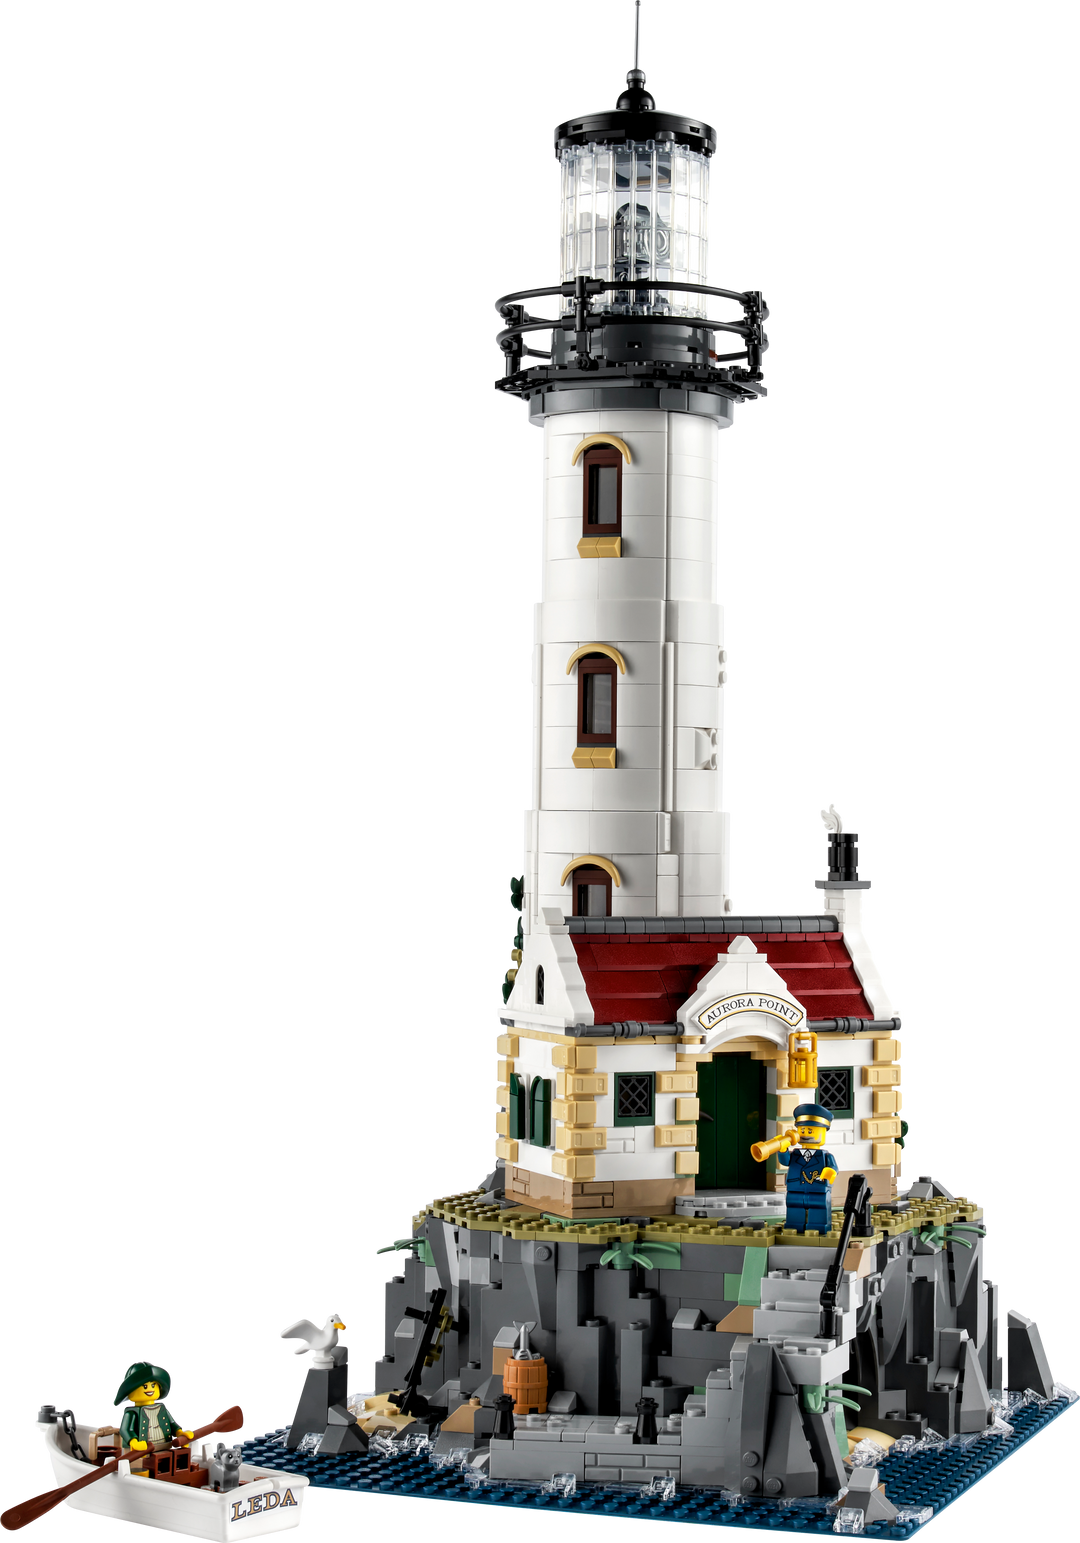 21335 Motorised Lighthouse